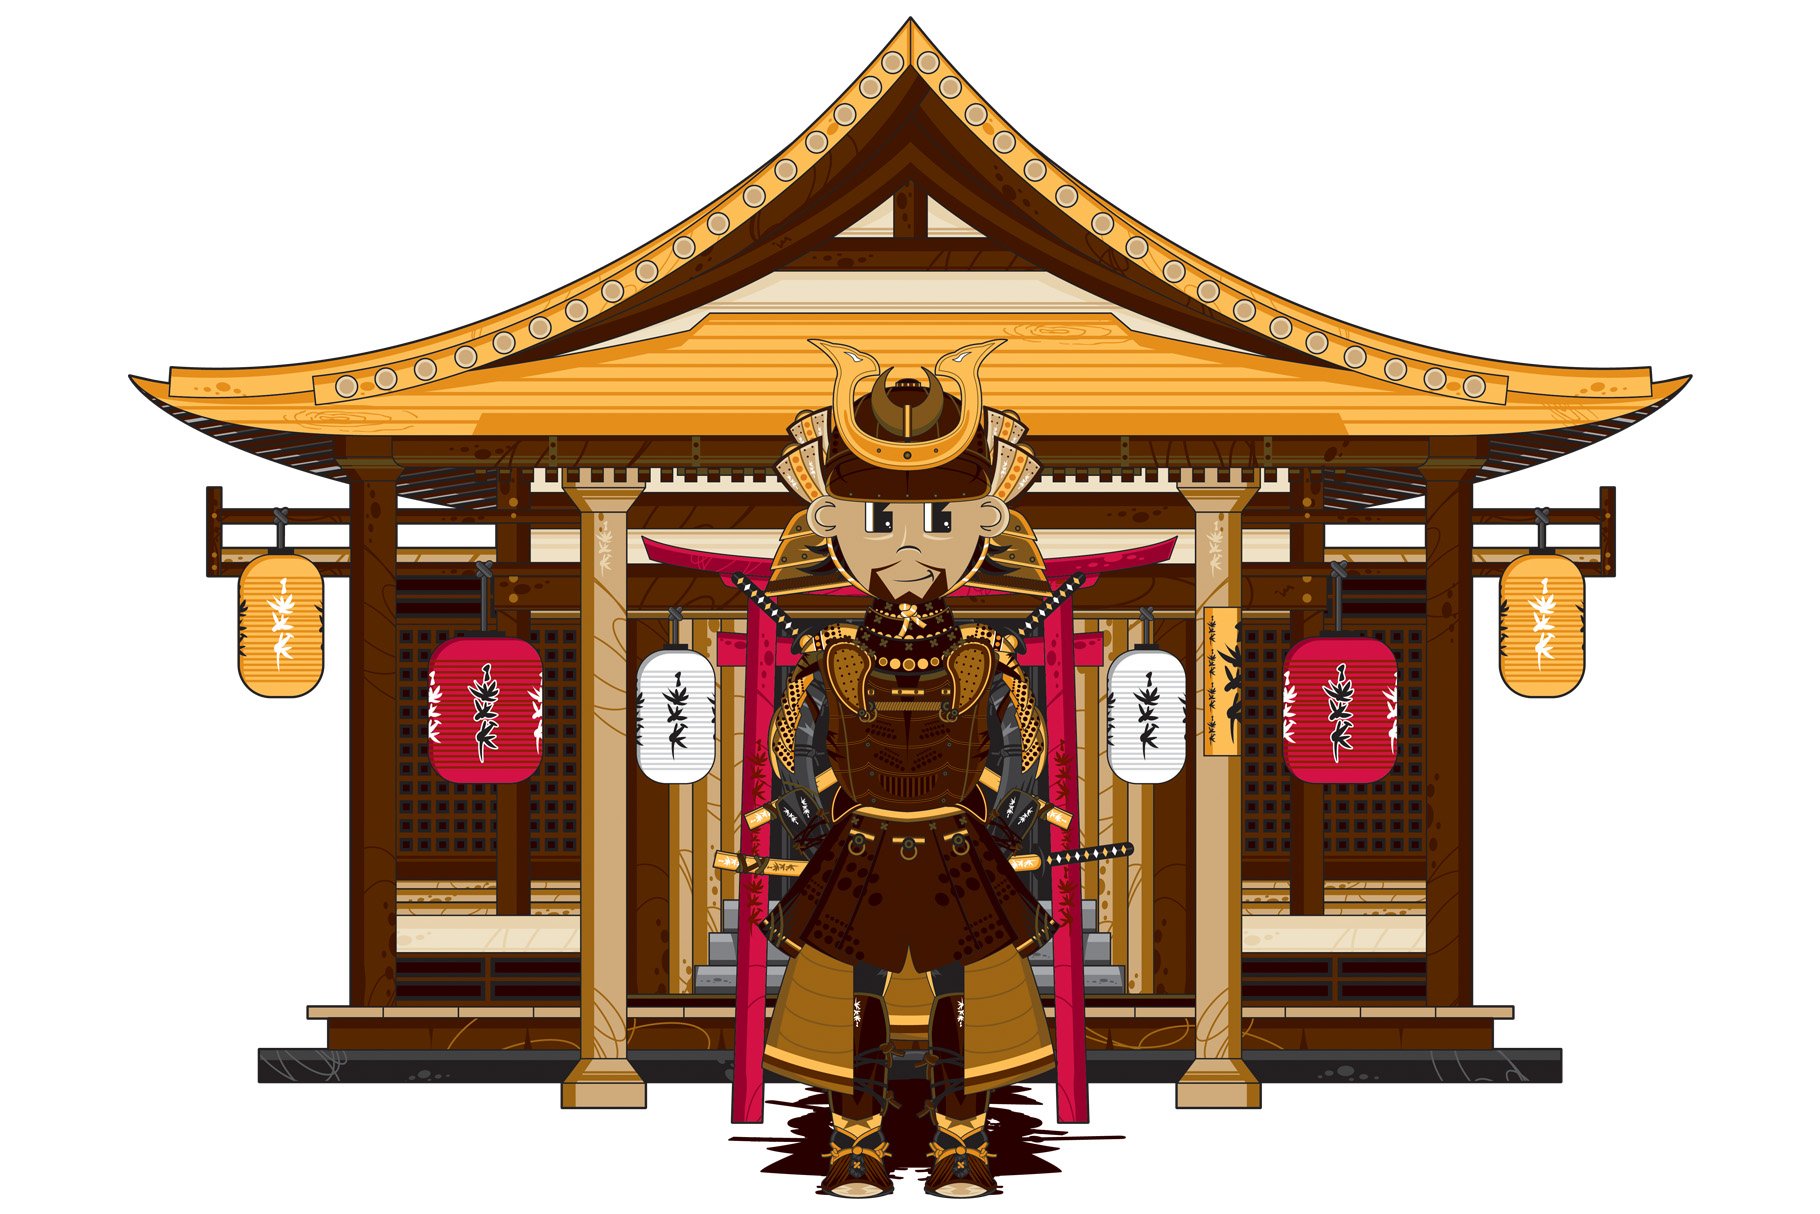 Fierce Samurai Warrior at Temple cover image.